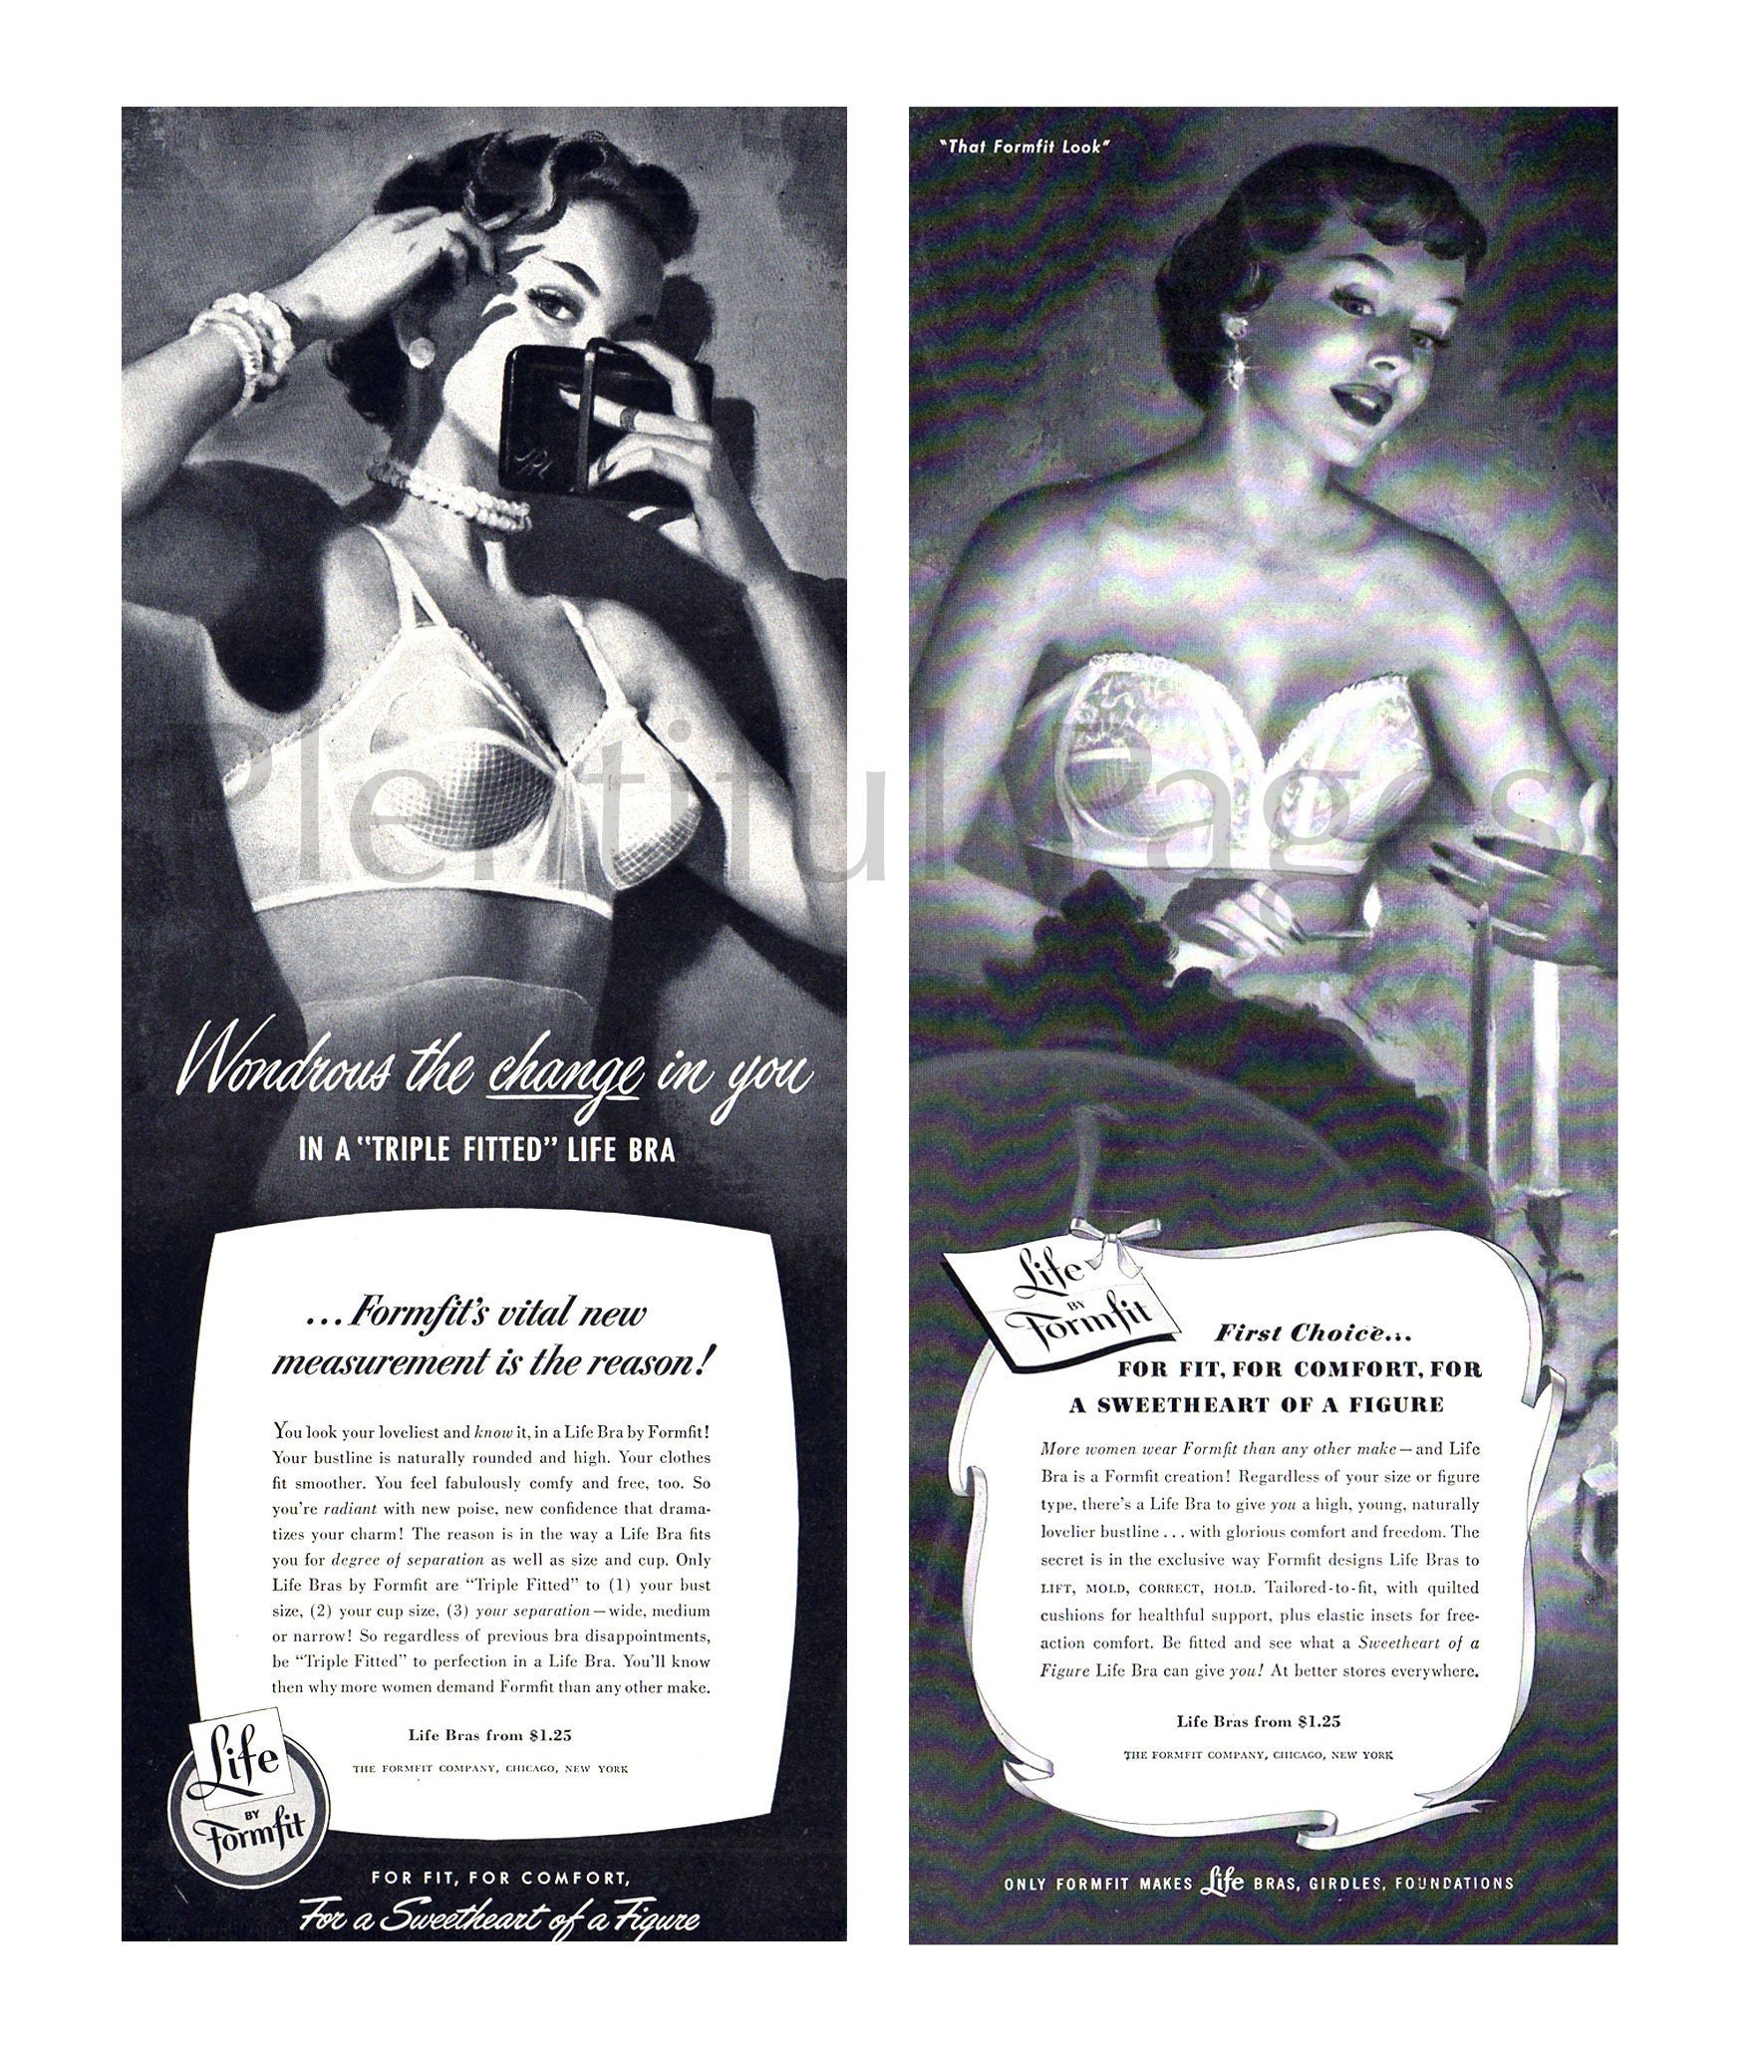 Playtex Bras, Bra, Full Page Vintage Print Ad 